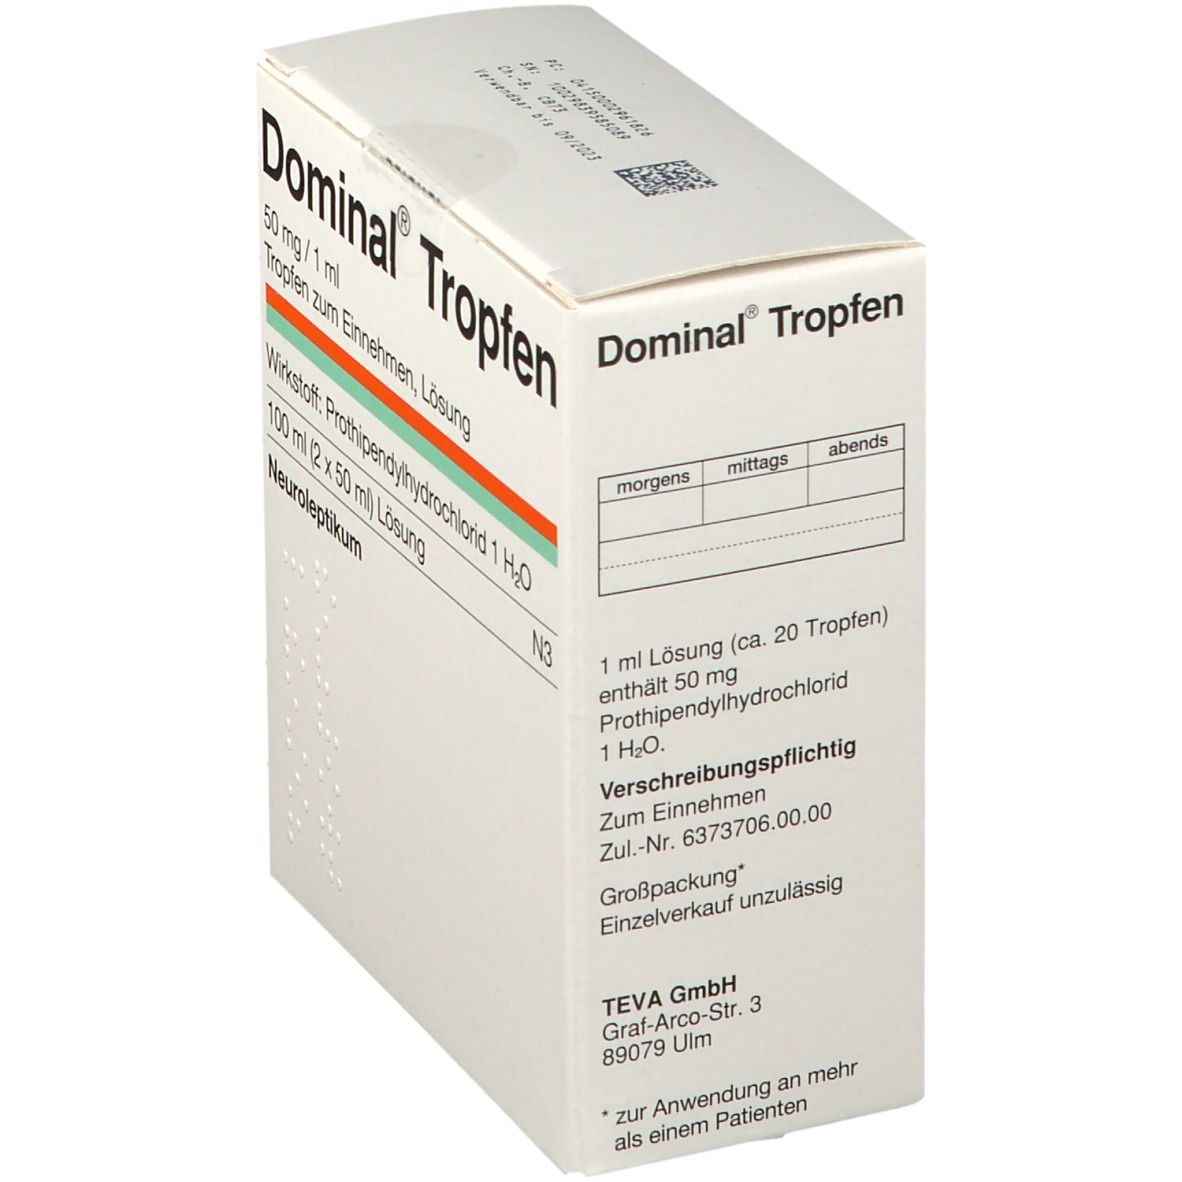 Dominal® Tropfen 50 mg/1 ml